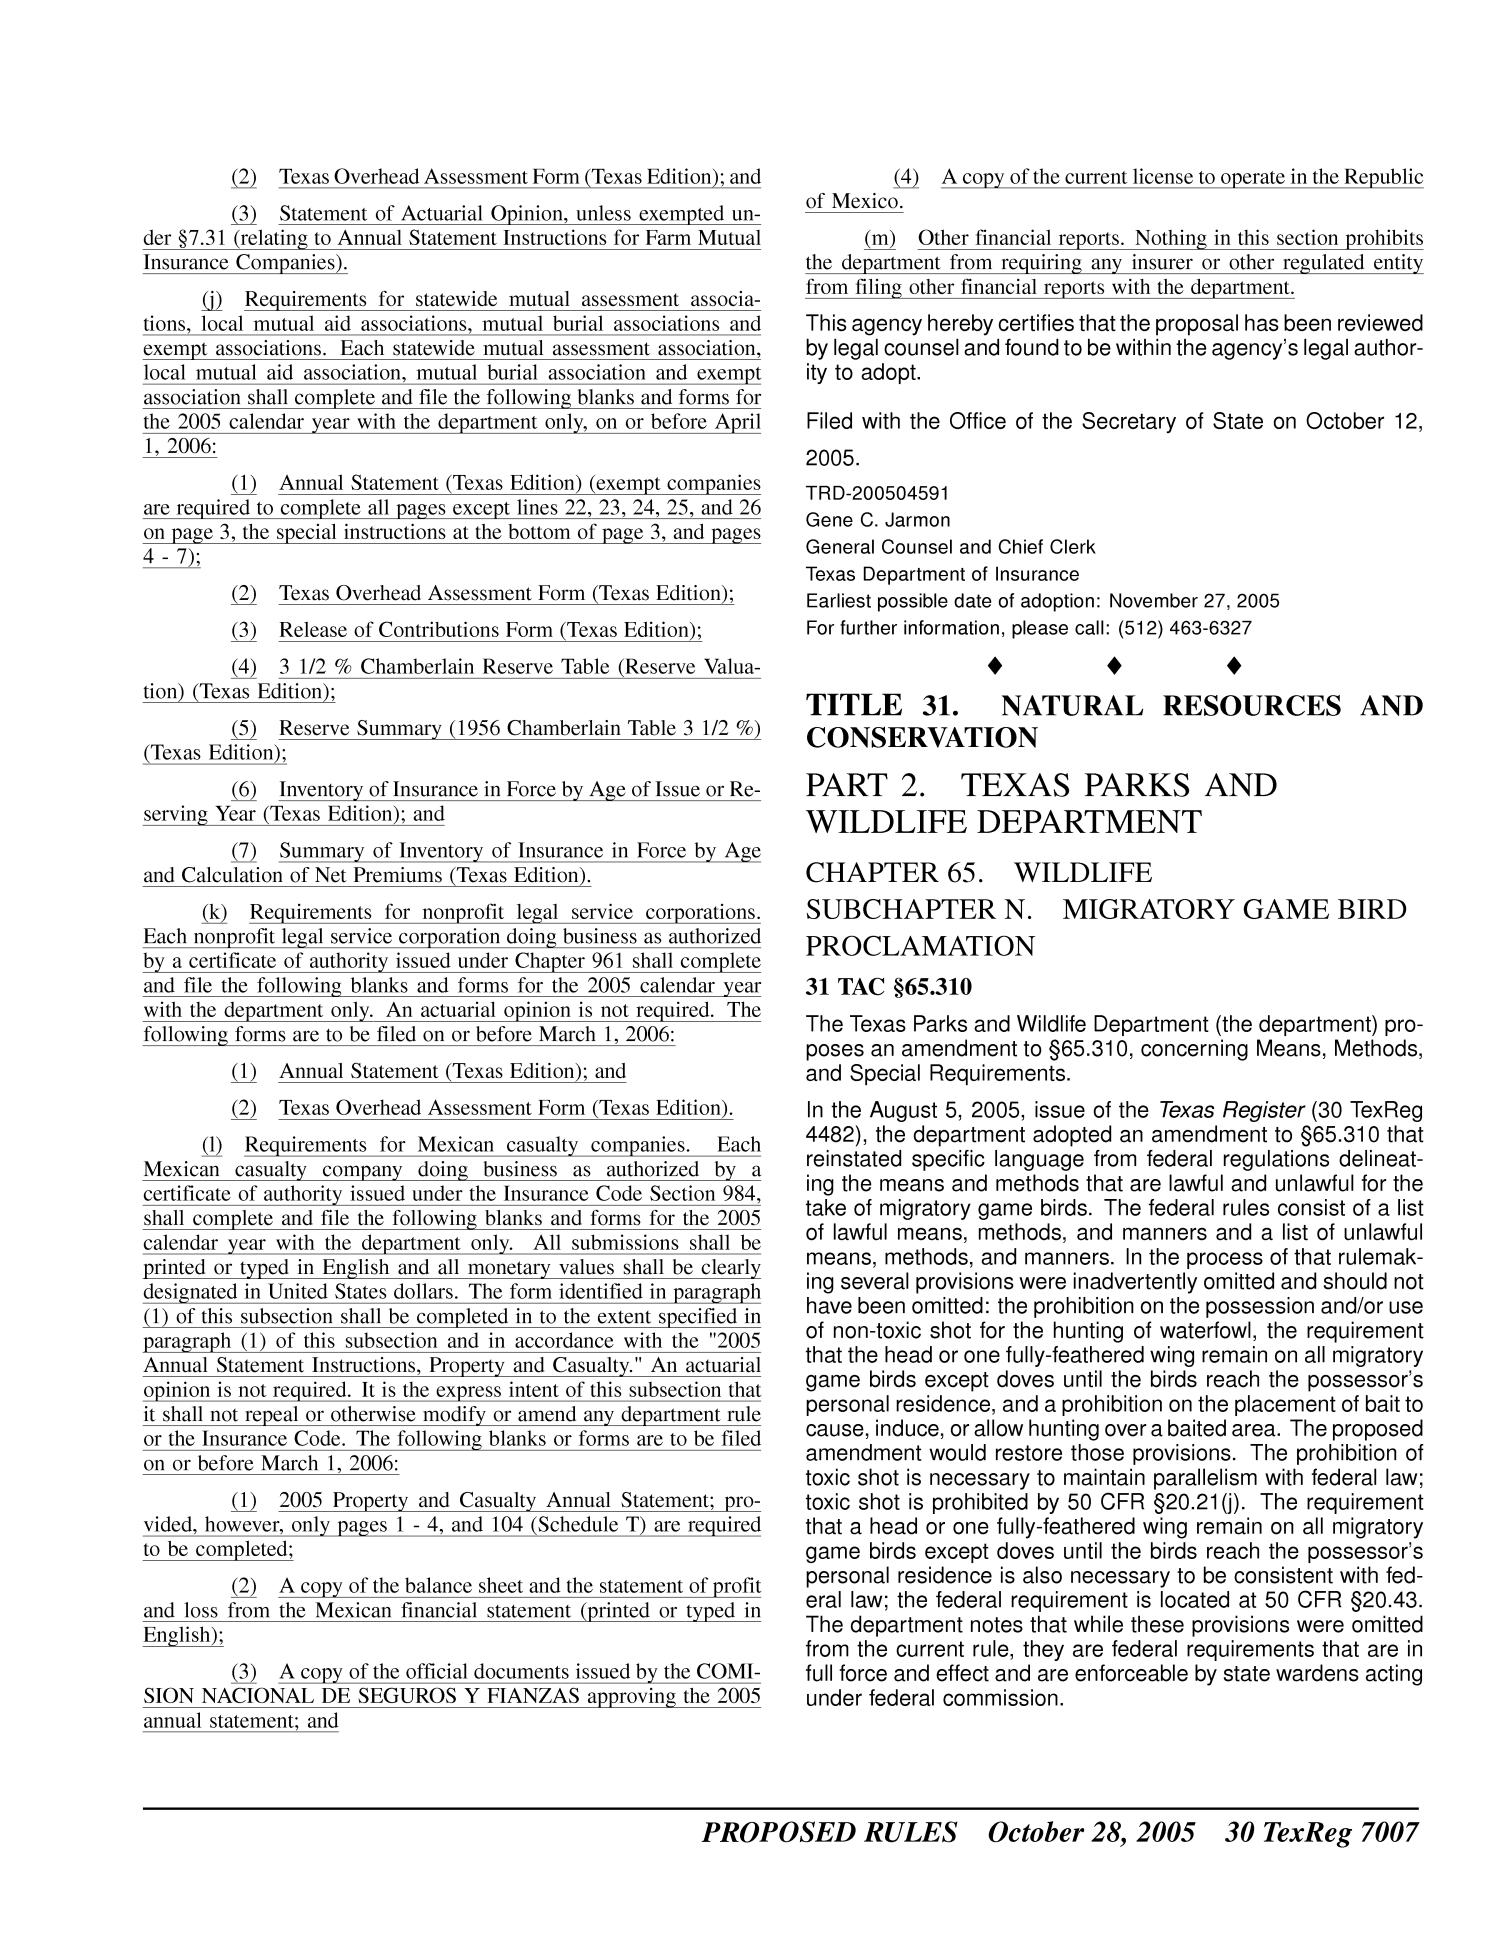 Texas Register, Volume 30, Number 43, Pages 6973-7094, October 28, 2005
                                                
                                                    7007
                                                